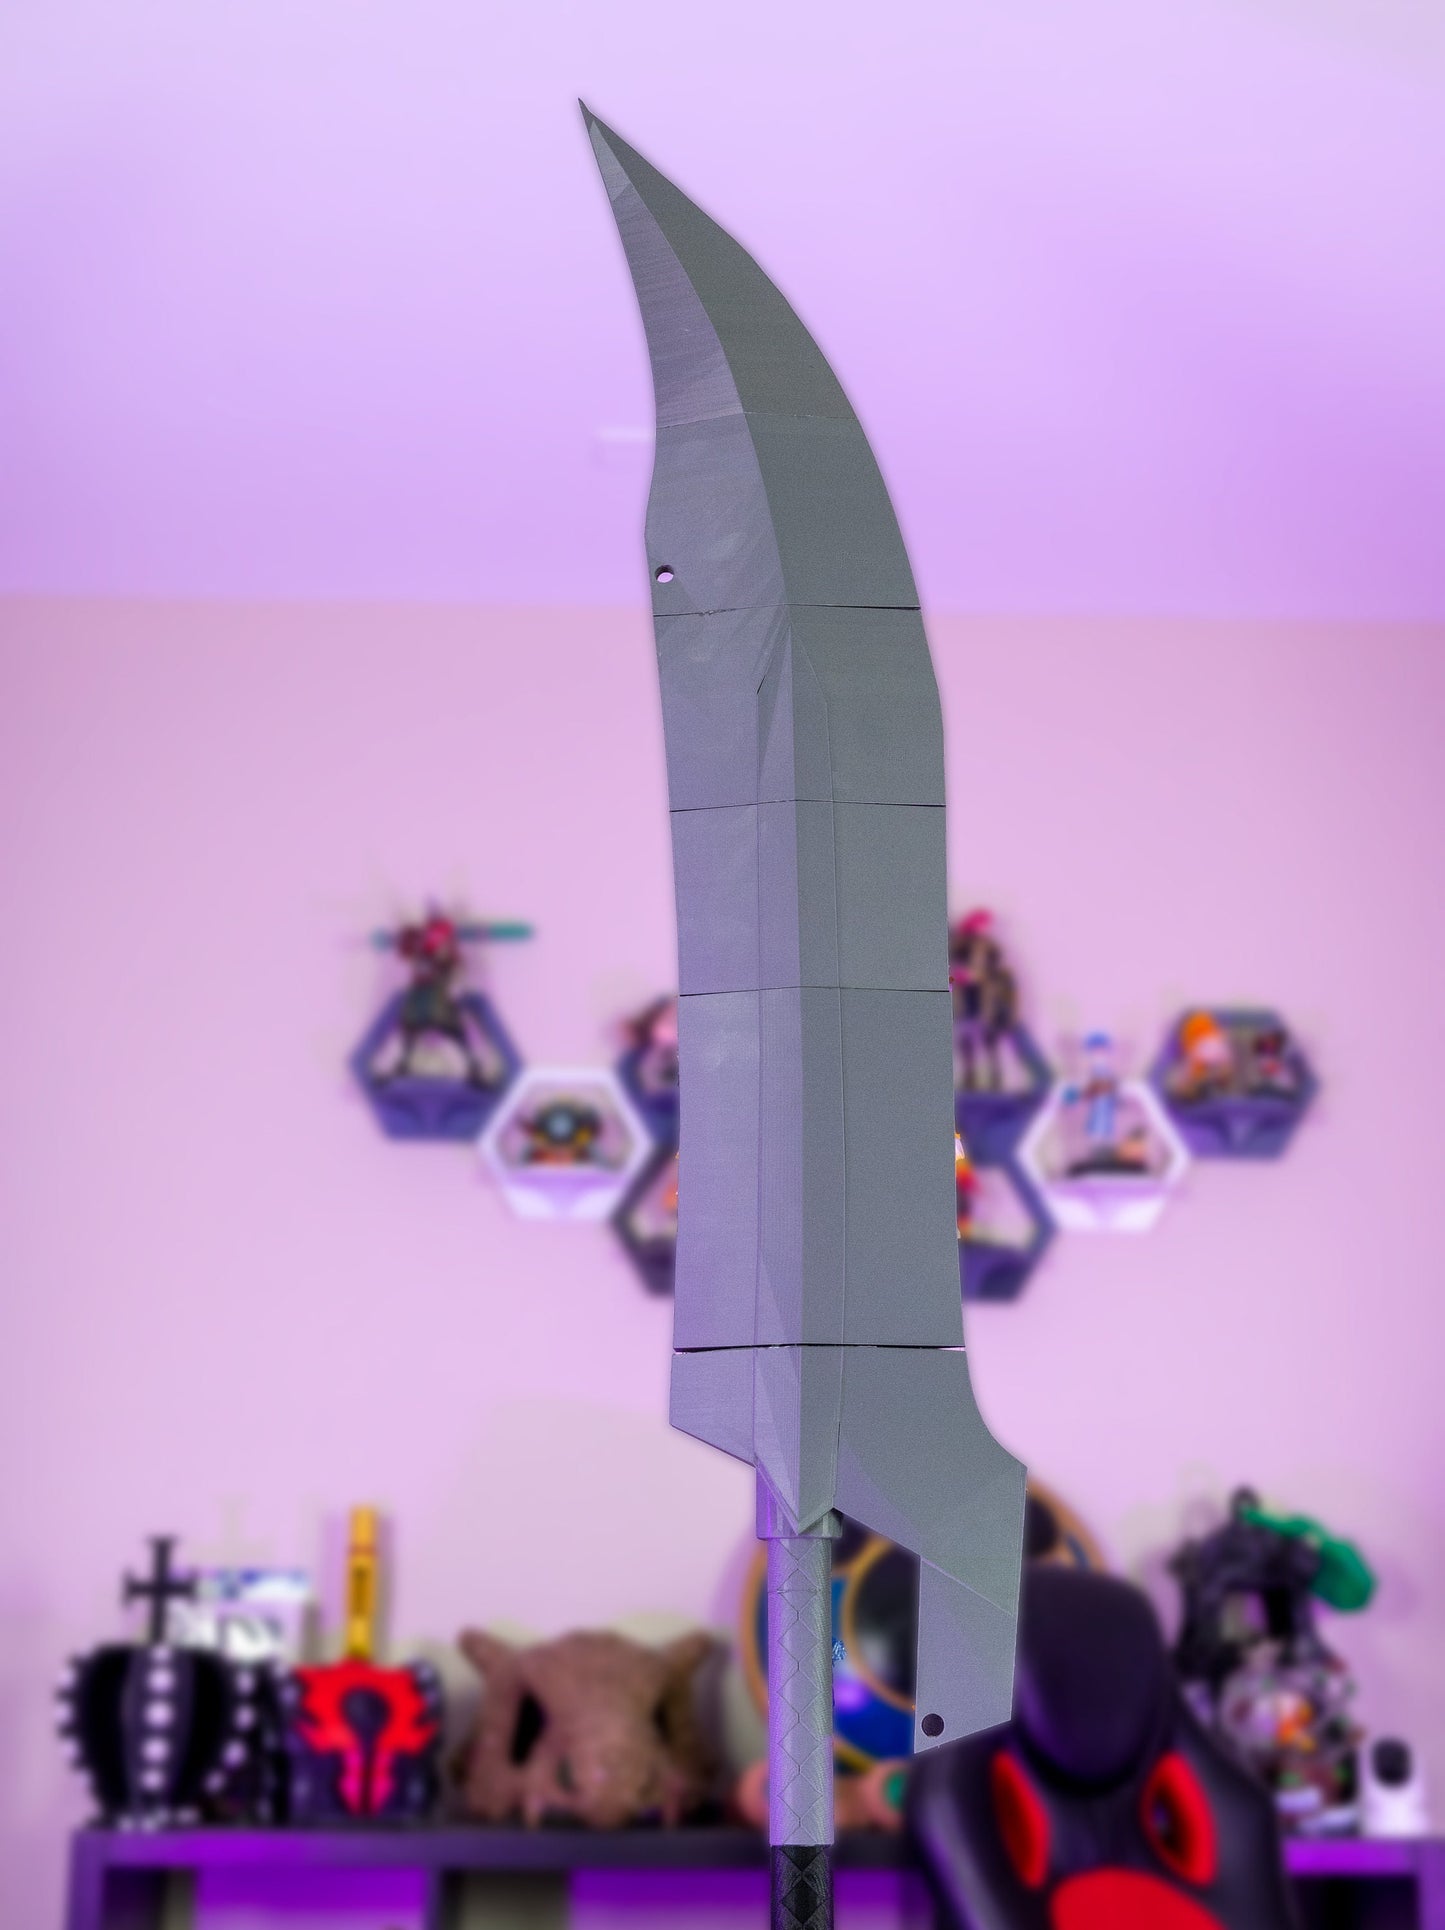 Ichigo Full Bringer Bleach Thousand Year War Sword For Cosplay 3D Printed True Bankai